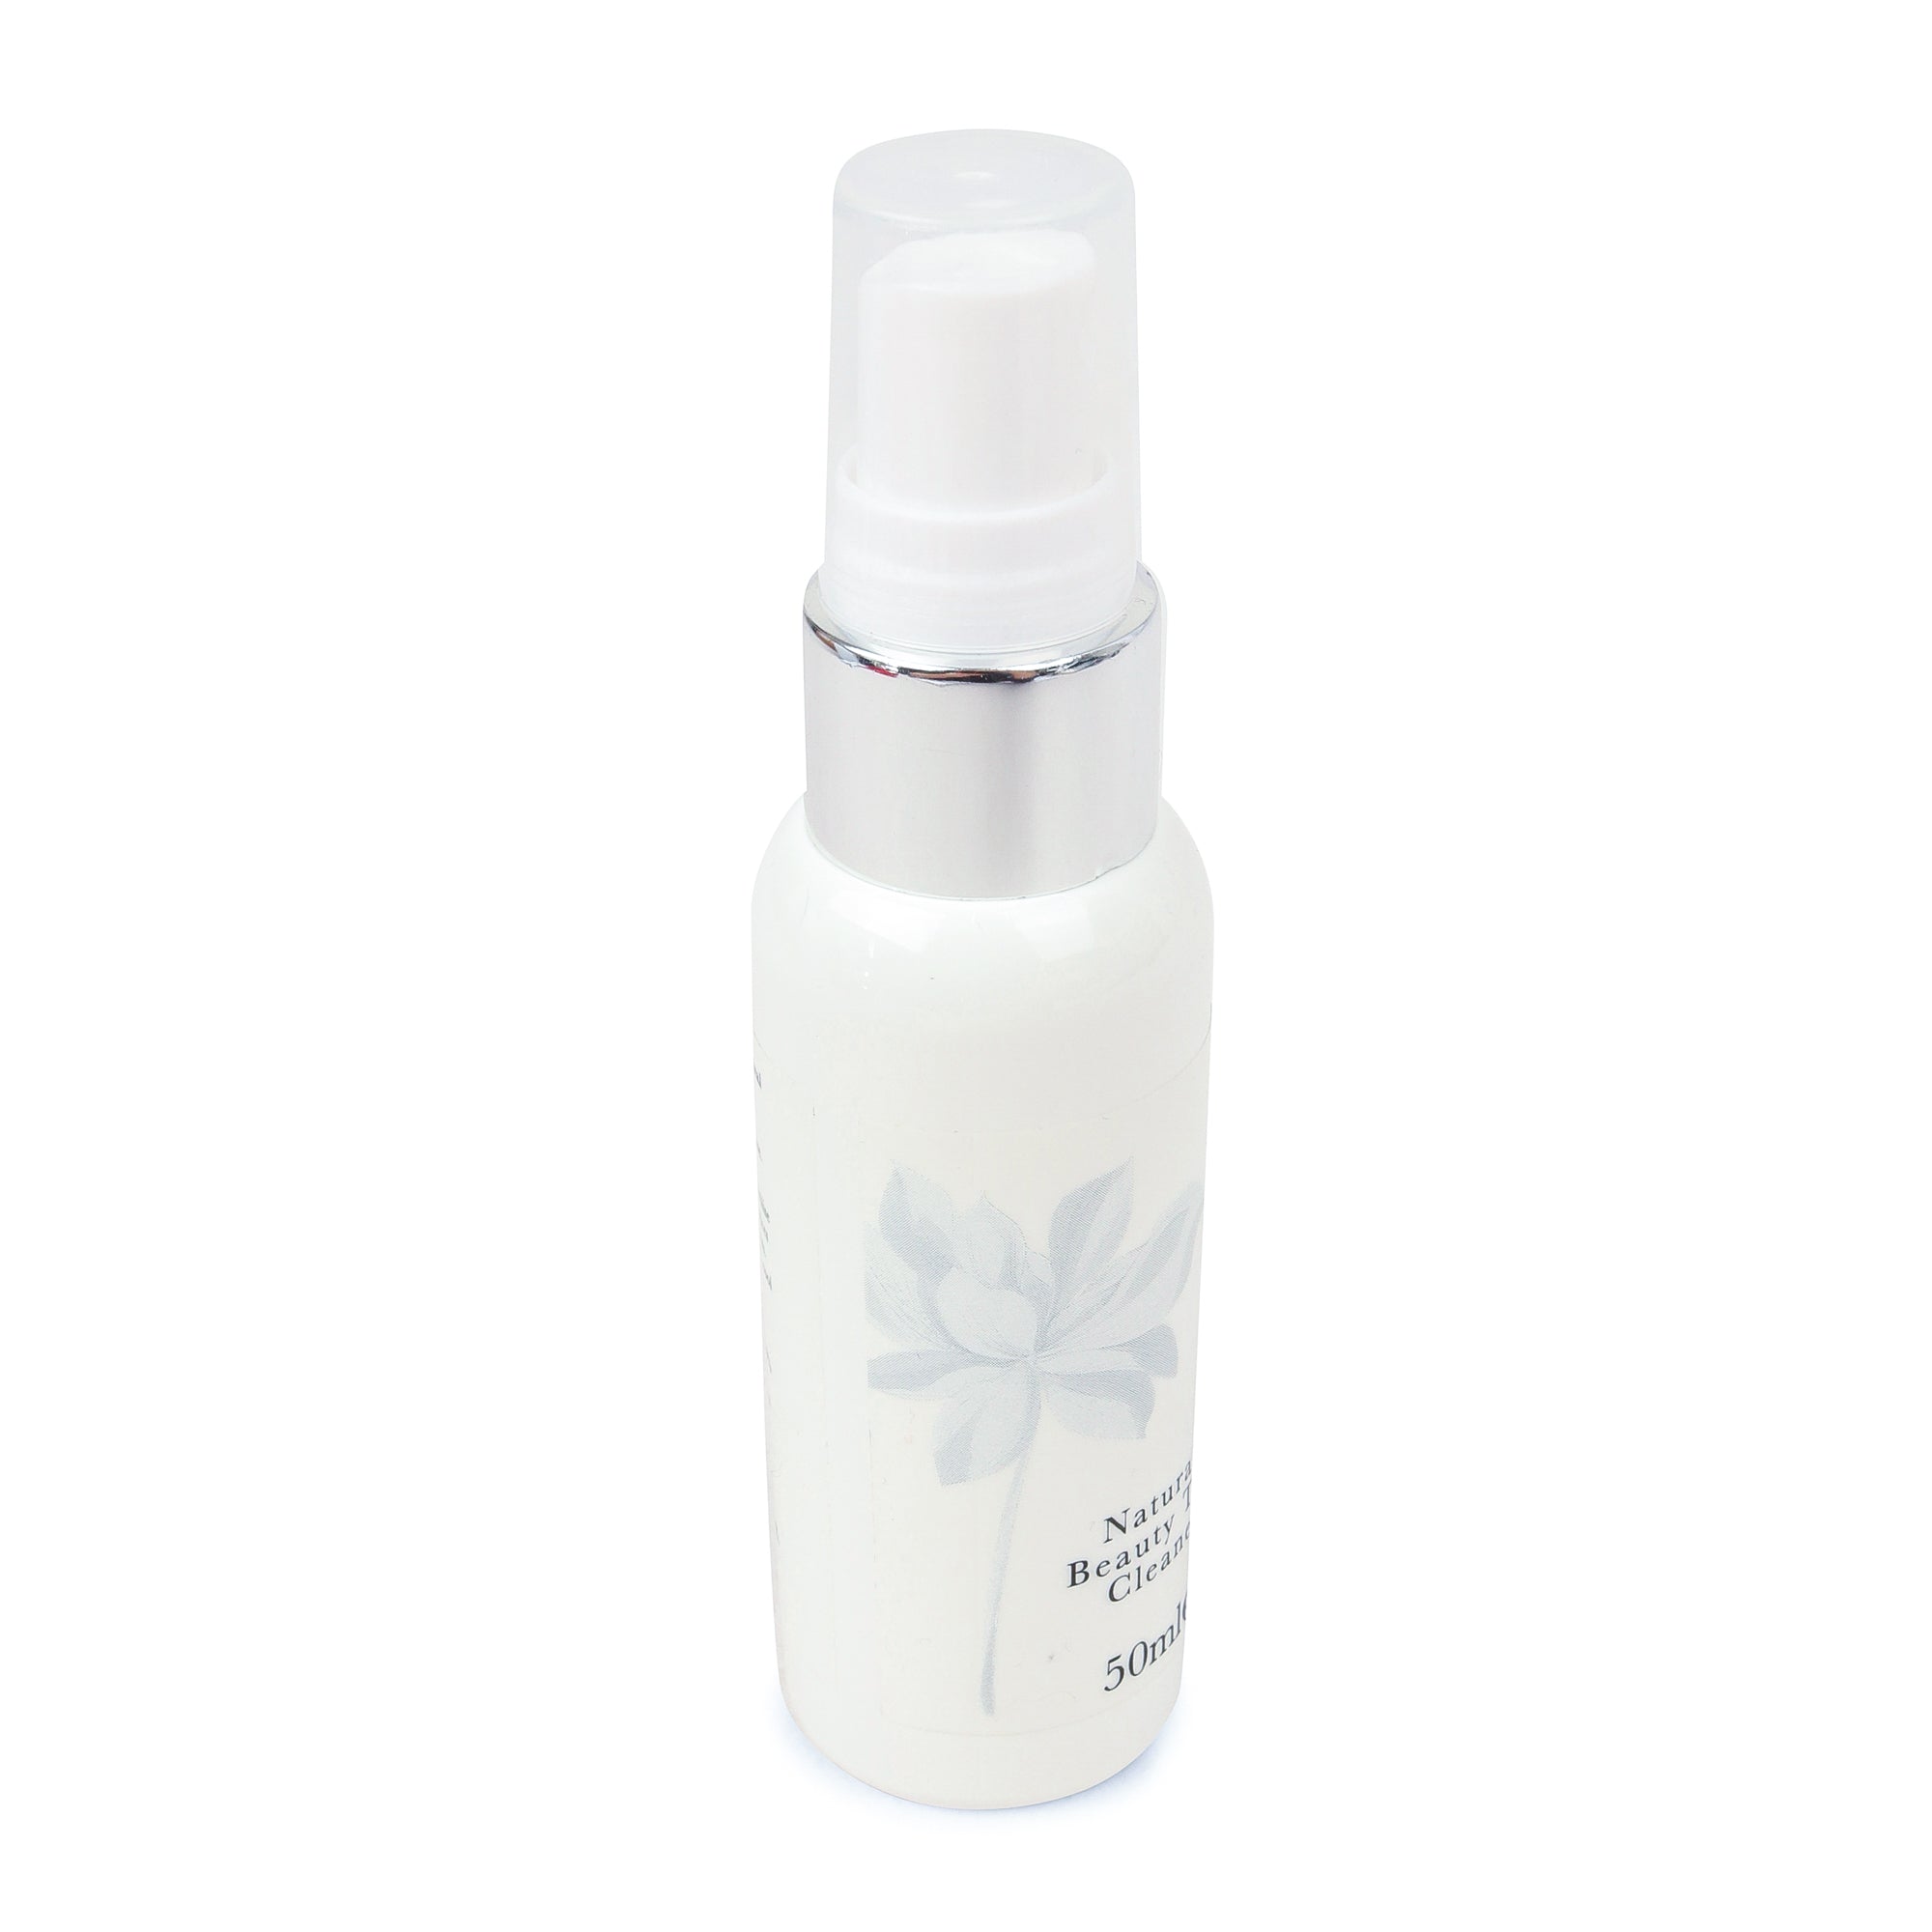 Skin Needling Roller / Dermastamp Cleaner - Anti Bacterial Colloidal Silver Spray 50mL